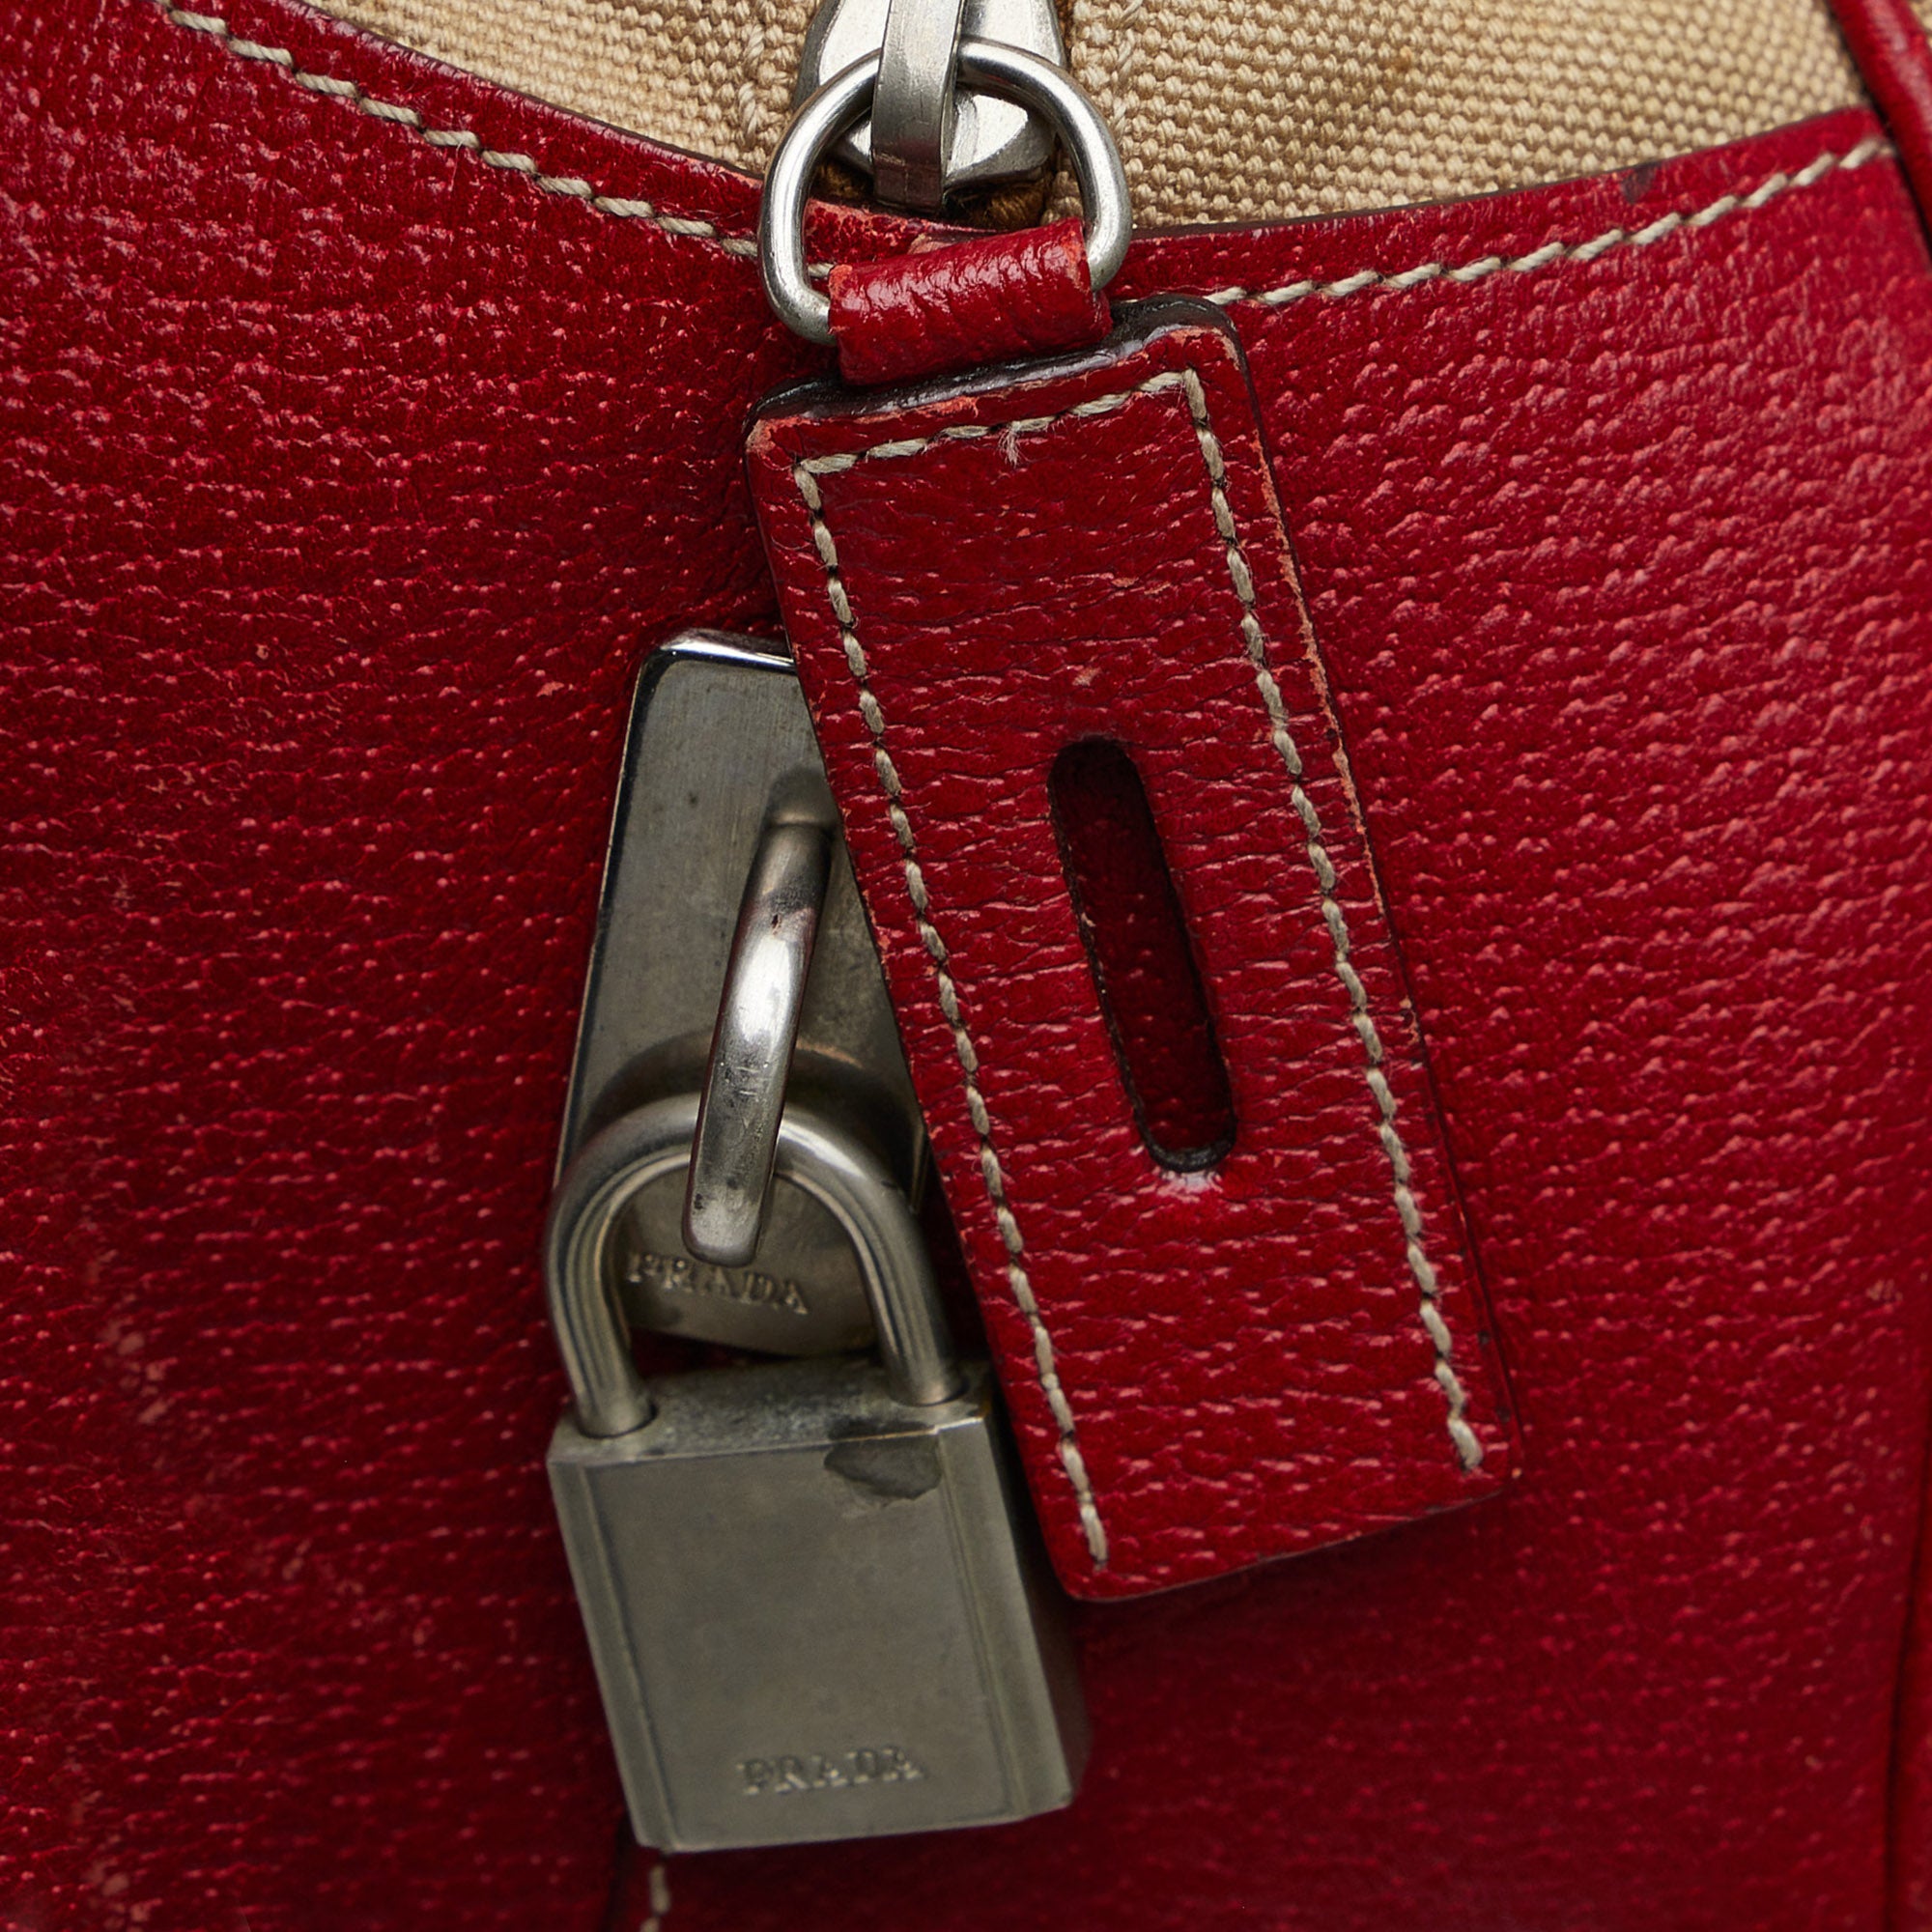 Prada Bauletto hand bag. Used handbag. Color brown and red. Offers